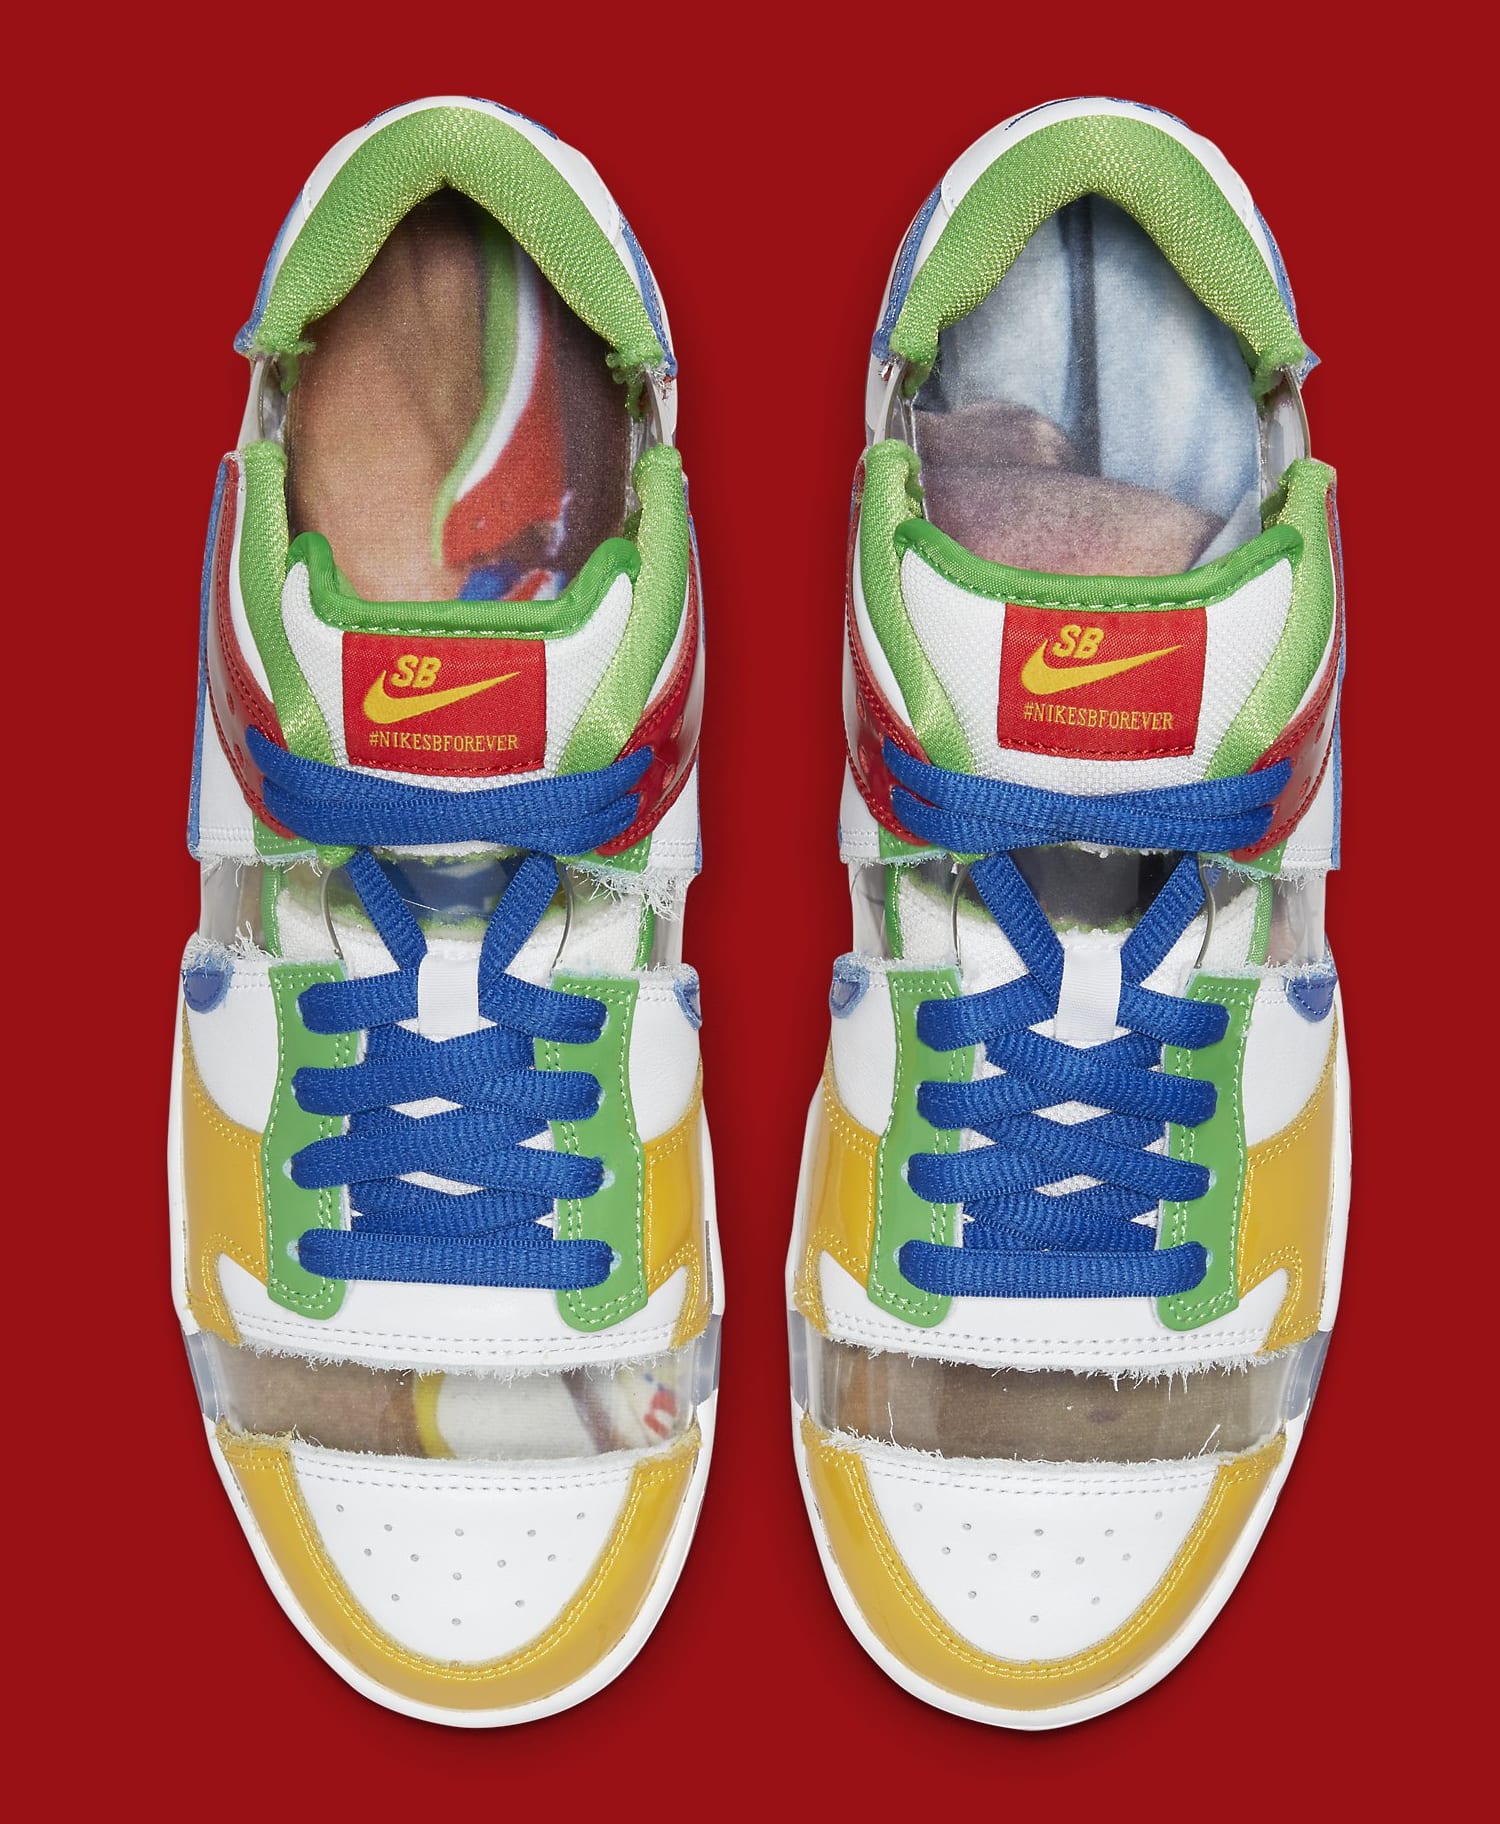 Sandy Bodecker eBay x Nike SB Dunk Low Retro Release Date FD8777 100 | Sole Collector